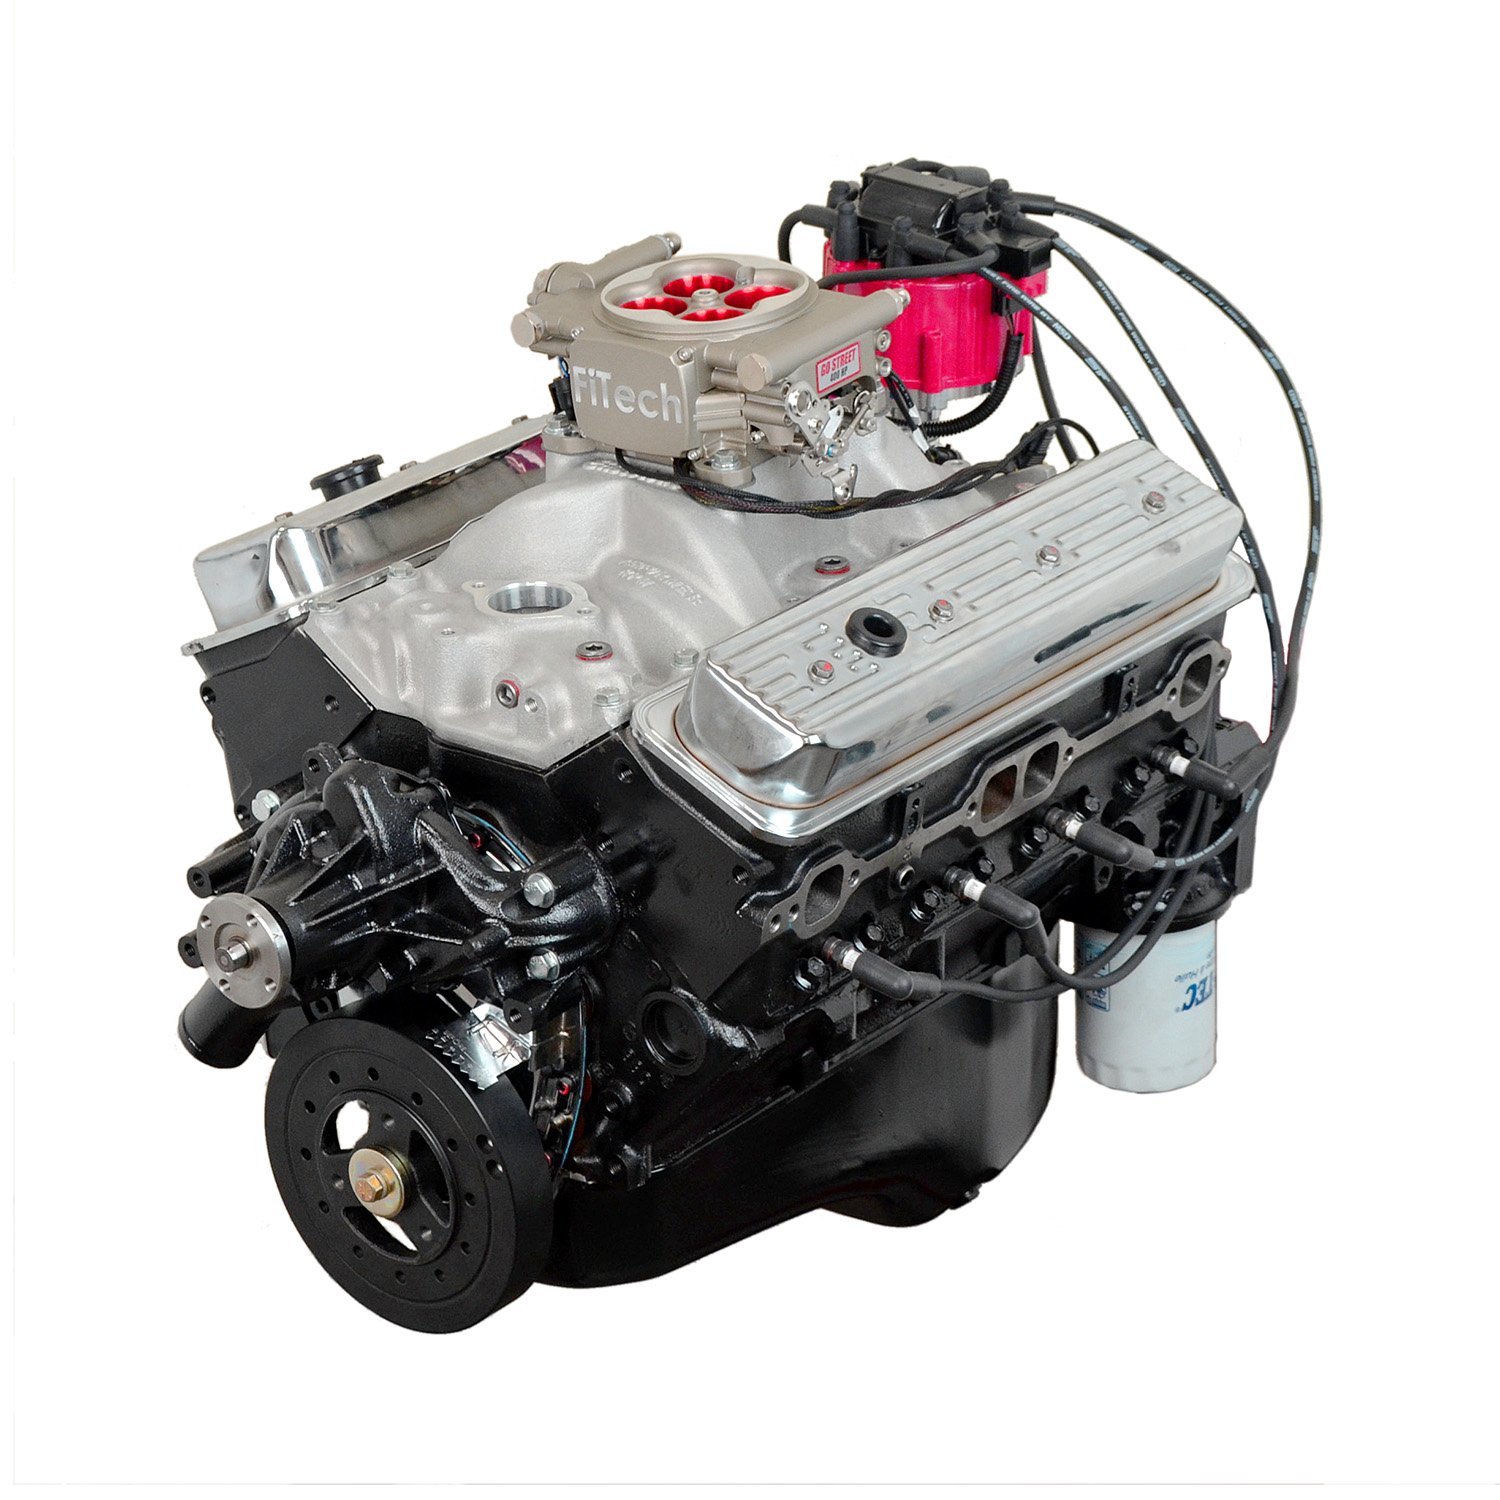 HP32C High Performance Crate Engine Small Block Chevy 350ci / 350HP / 400TQ